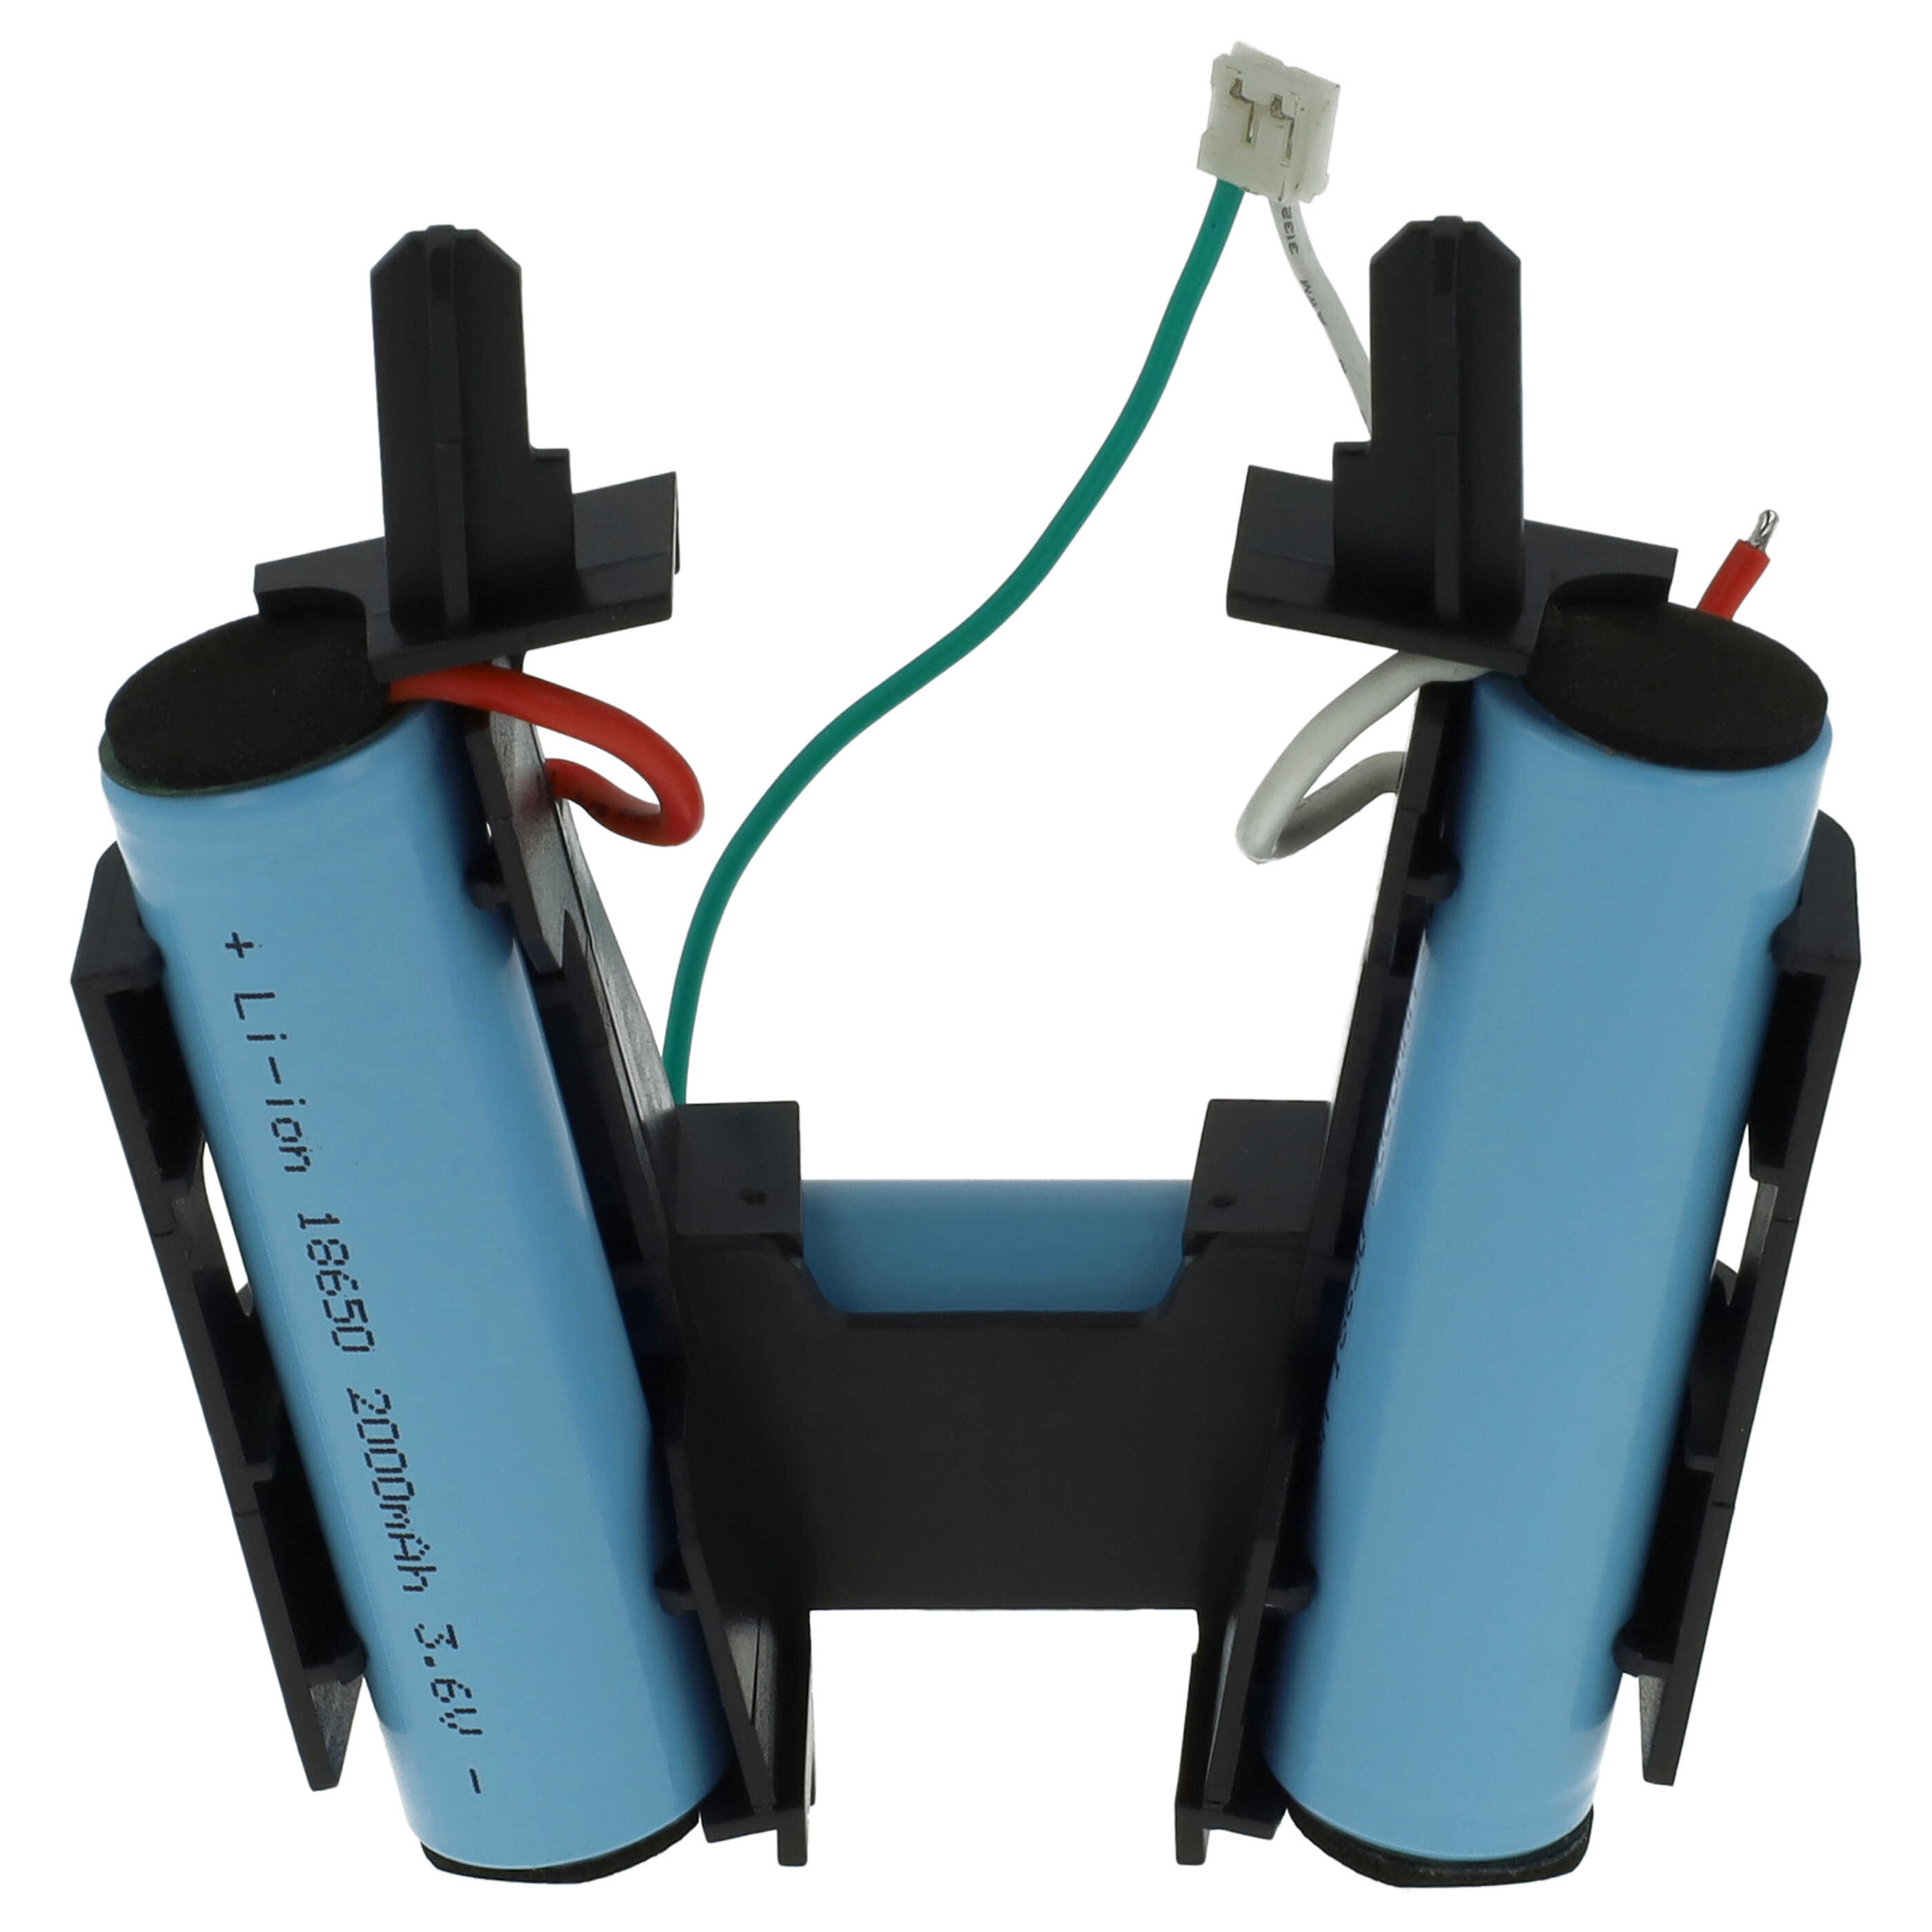 Batteria sostituisce AEG 140127175457 per aspirapolvere Electrolux - 2000mAh 10,8V Li-Ion nero / blu